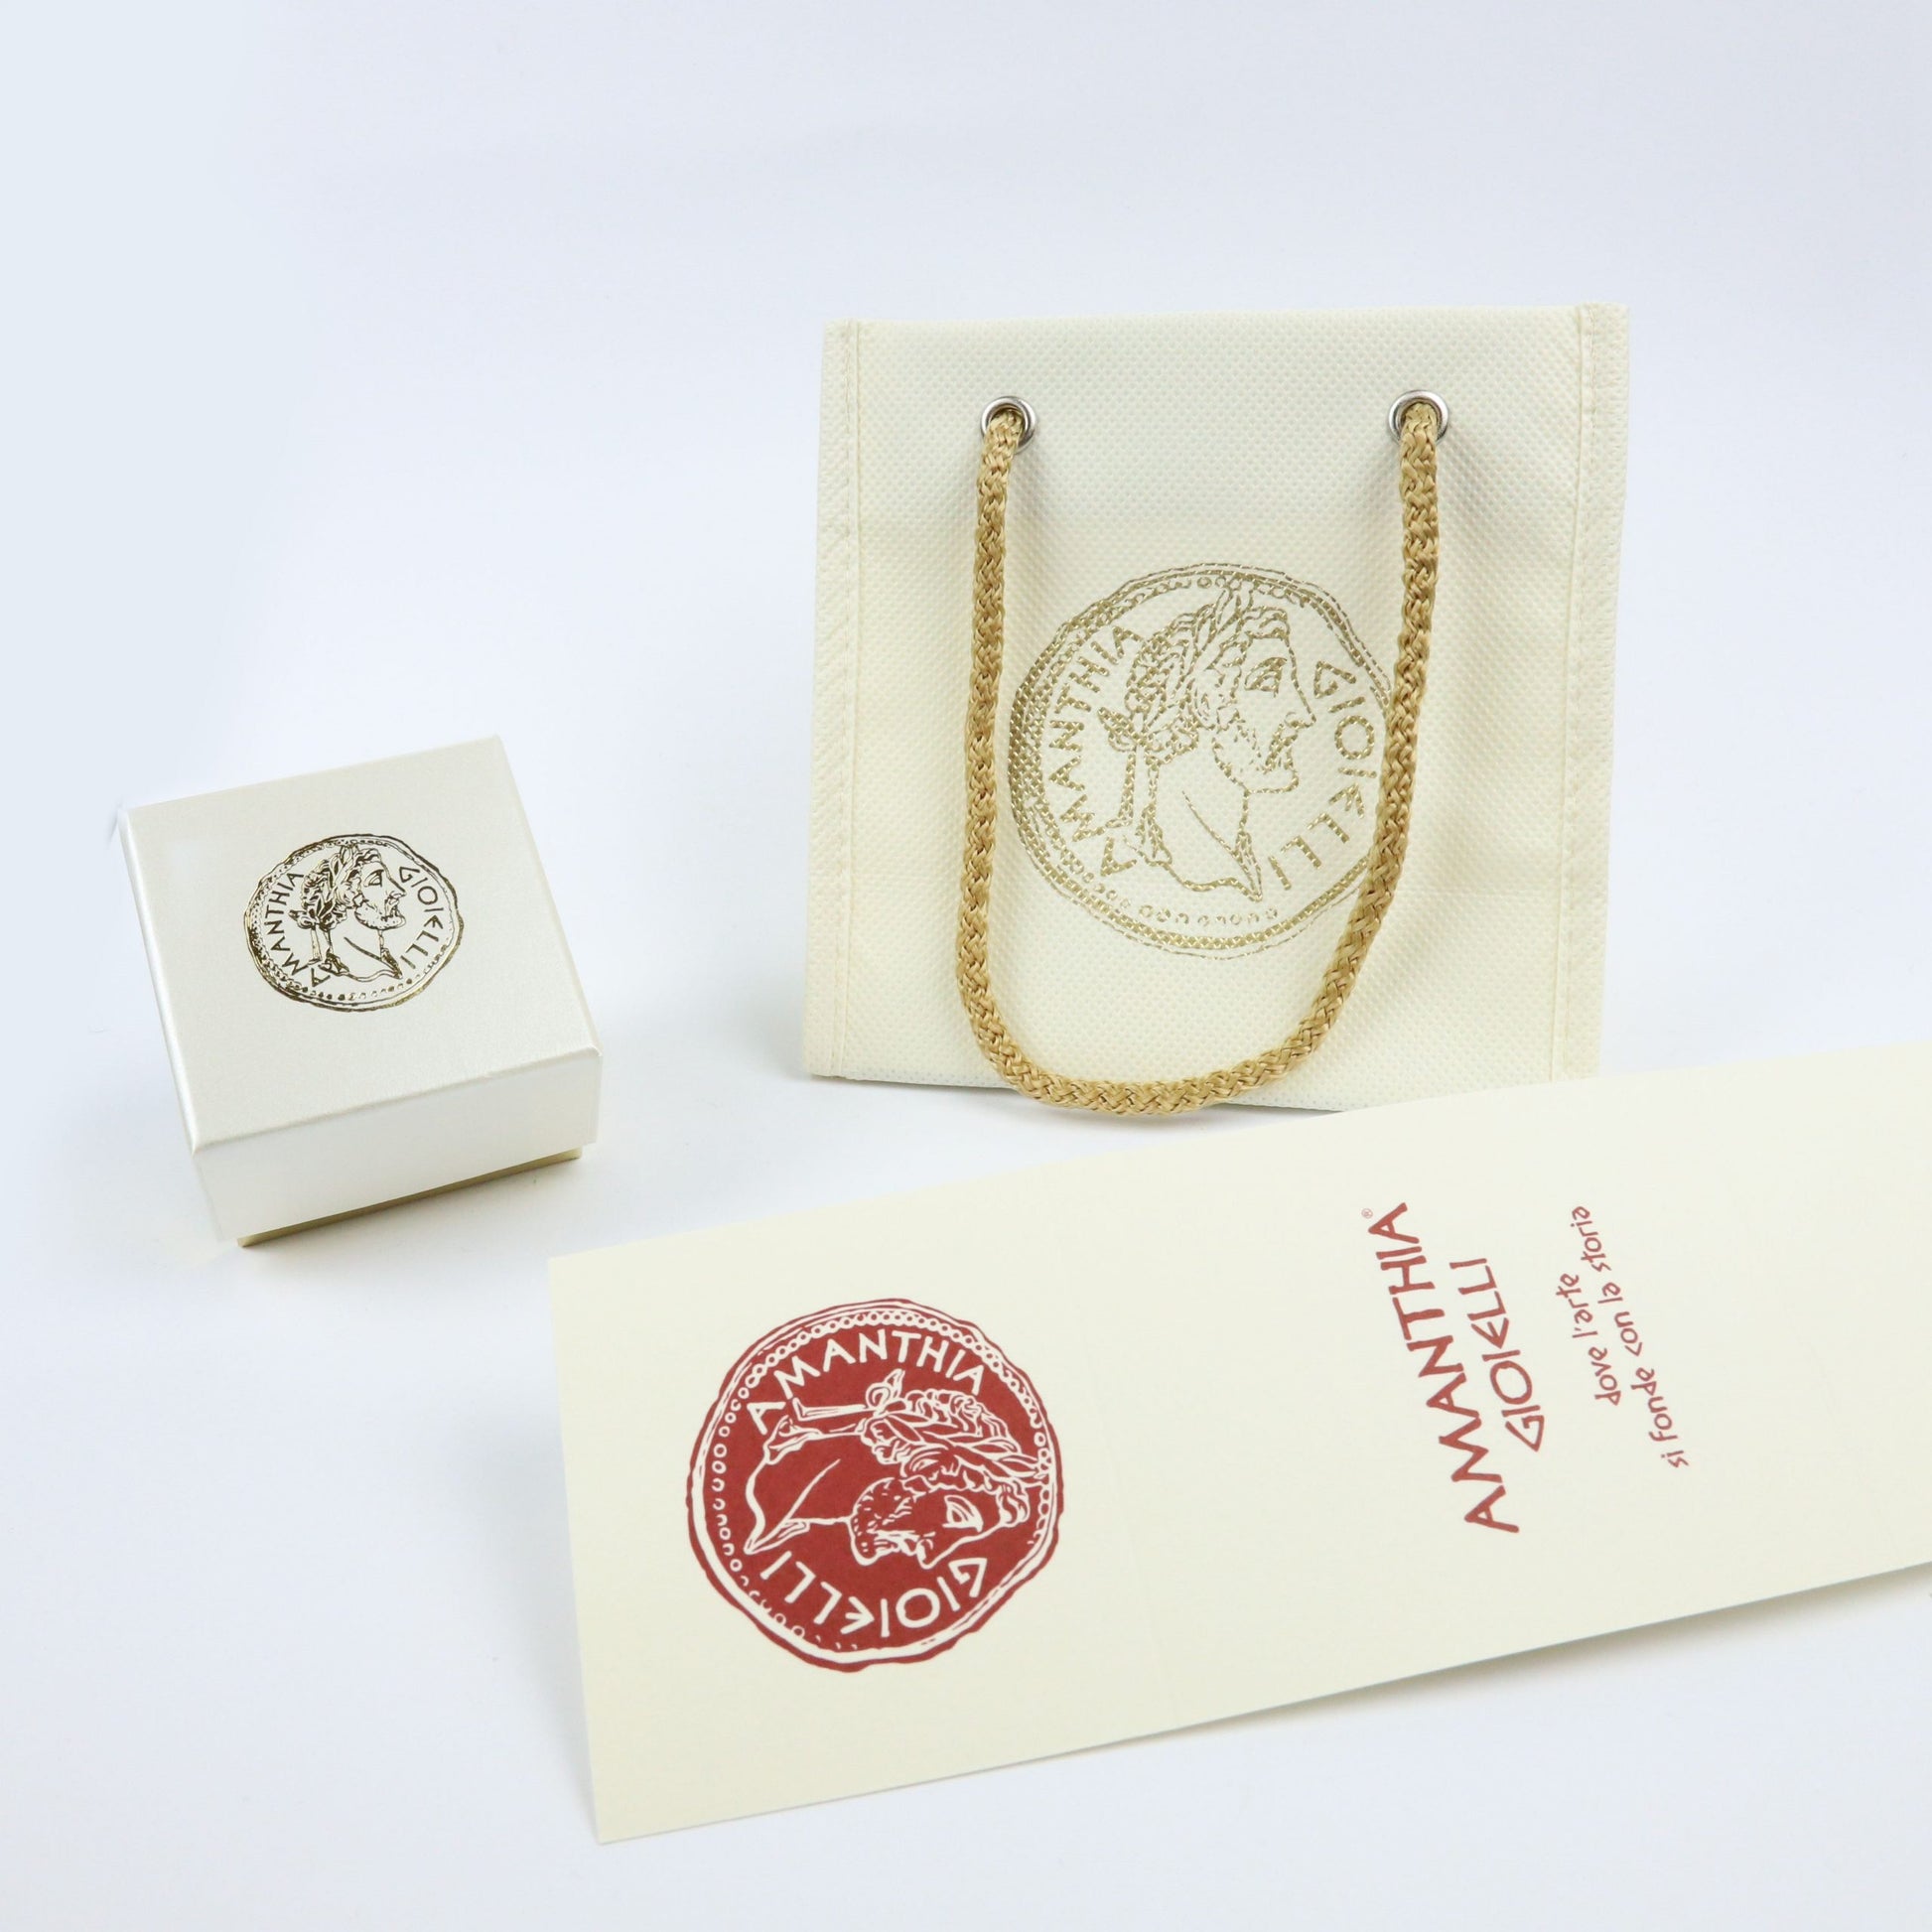 Bracciale rigido 3 fili Argento dorato con moneta d'epoca - BR.019  Amanthia   